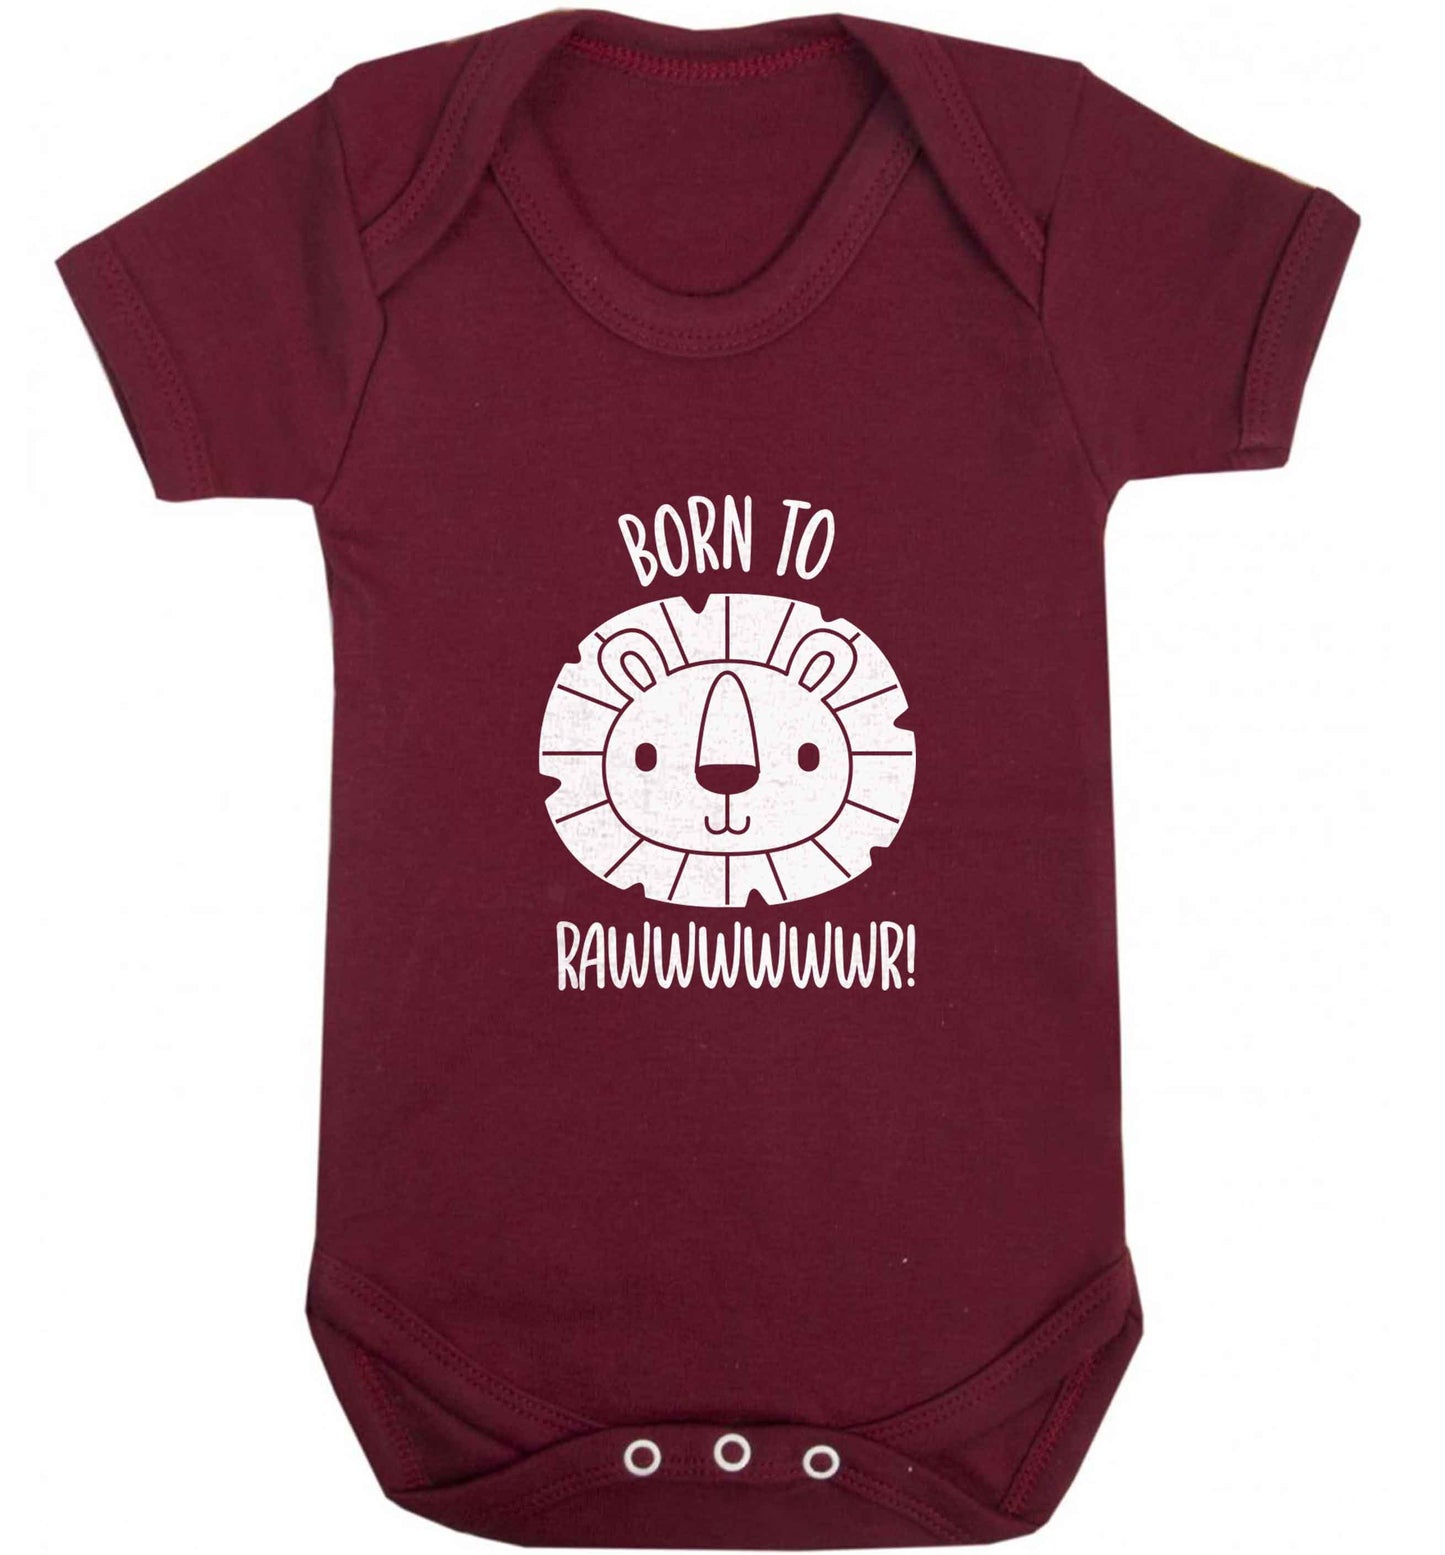 Born to rawr baby vest maroon 18-24 months